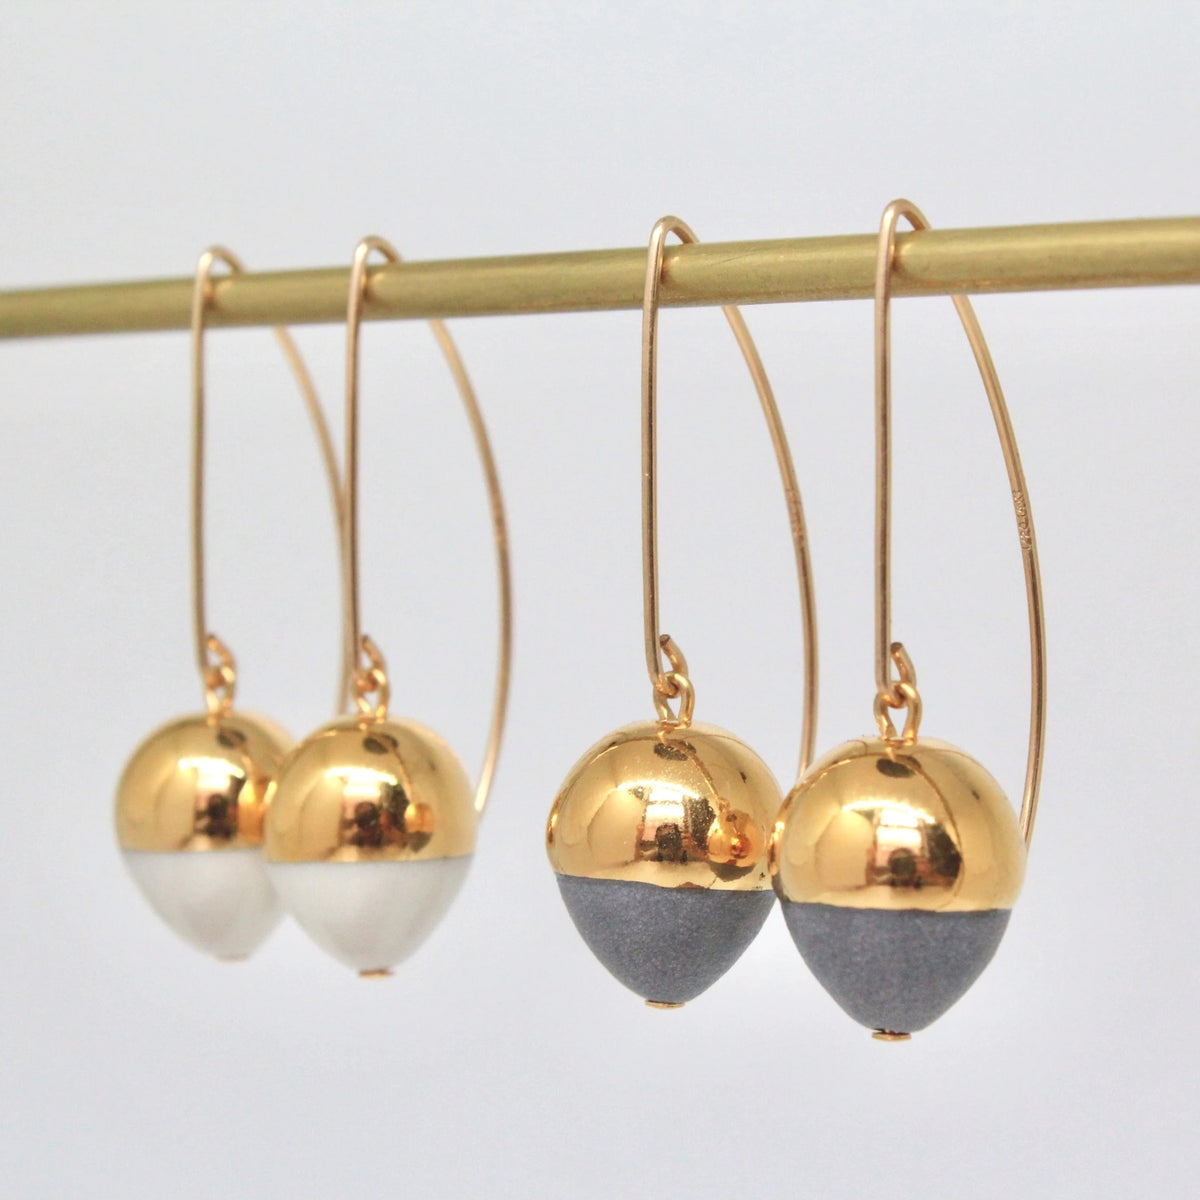 Gold dipped Acorn earrings